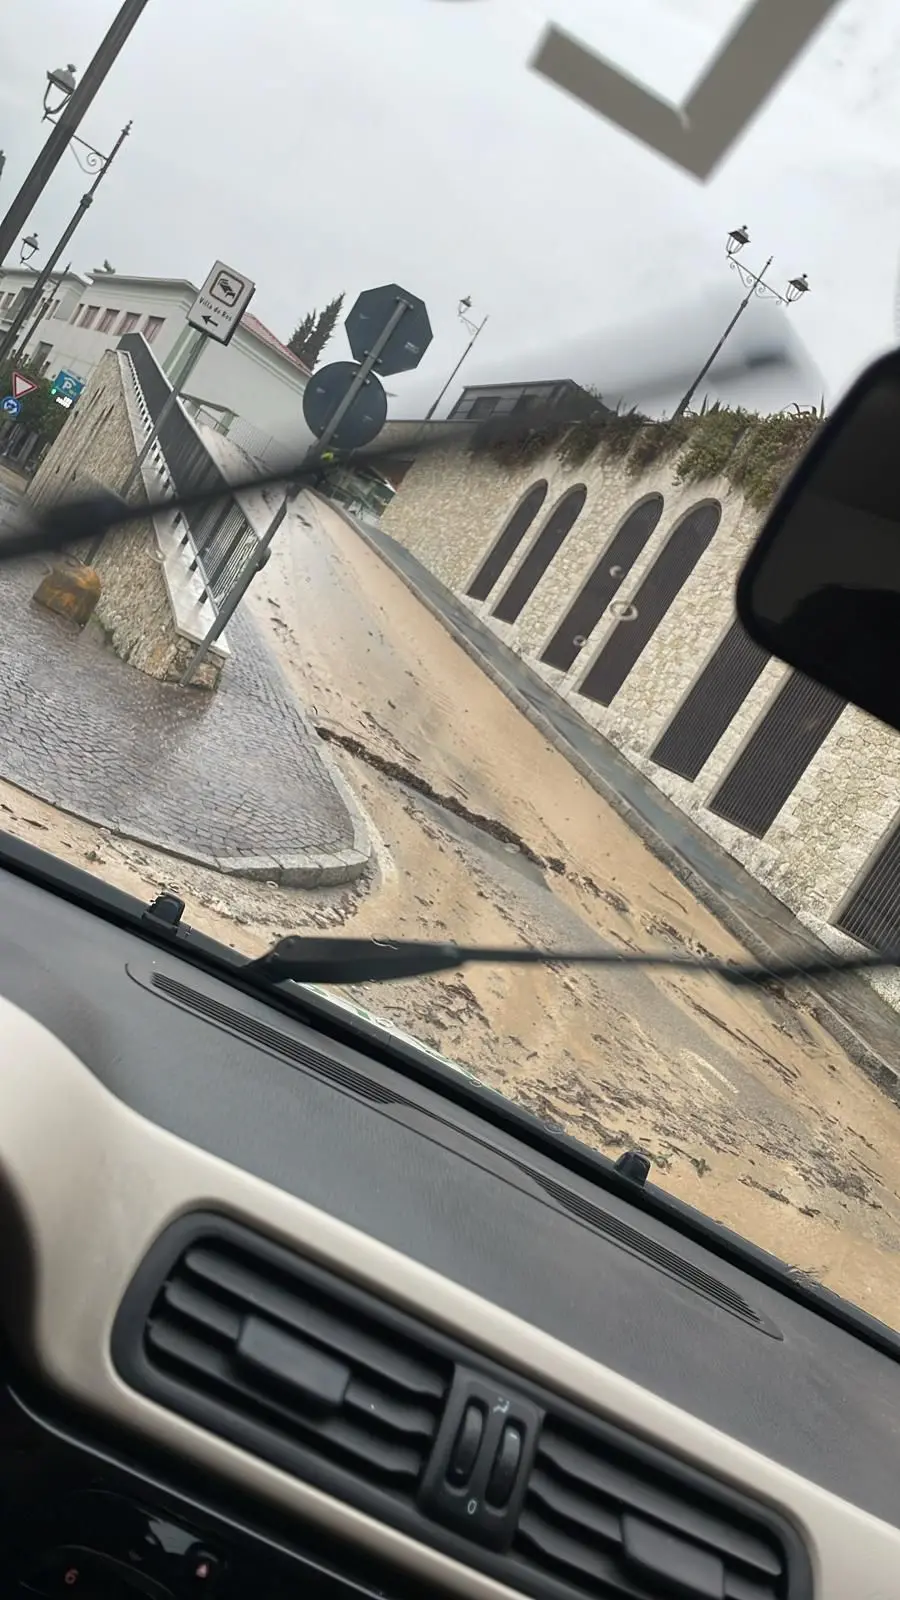 L'acqua invade la strada a Salò